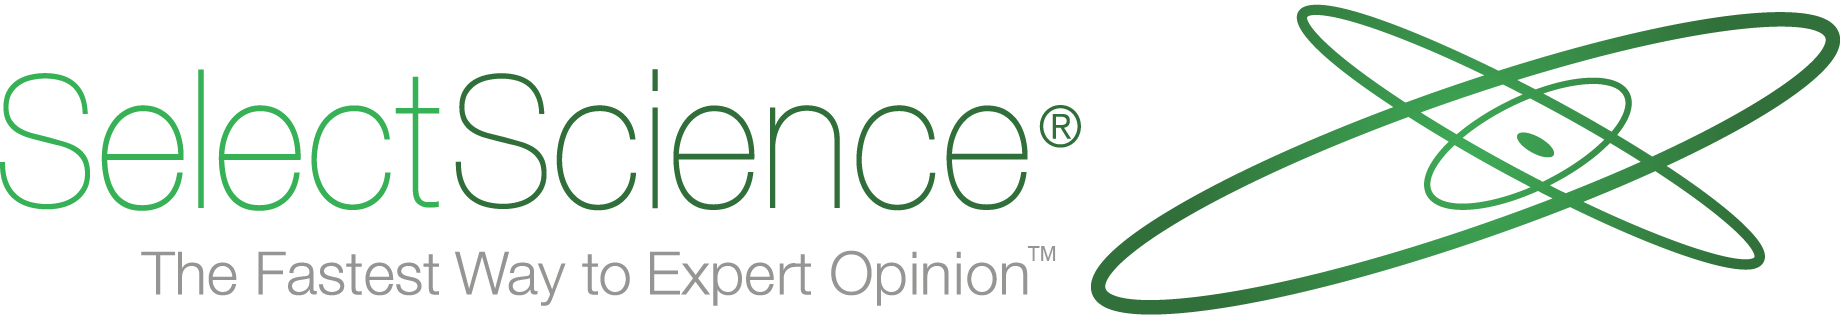 SelectScienceMasthead Transparent logo-1